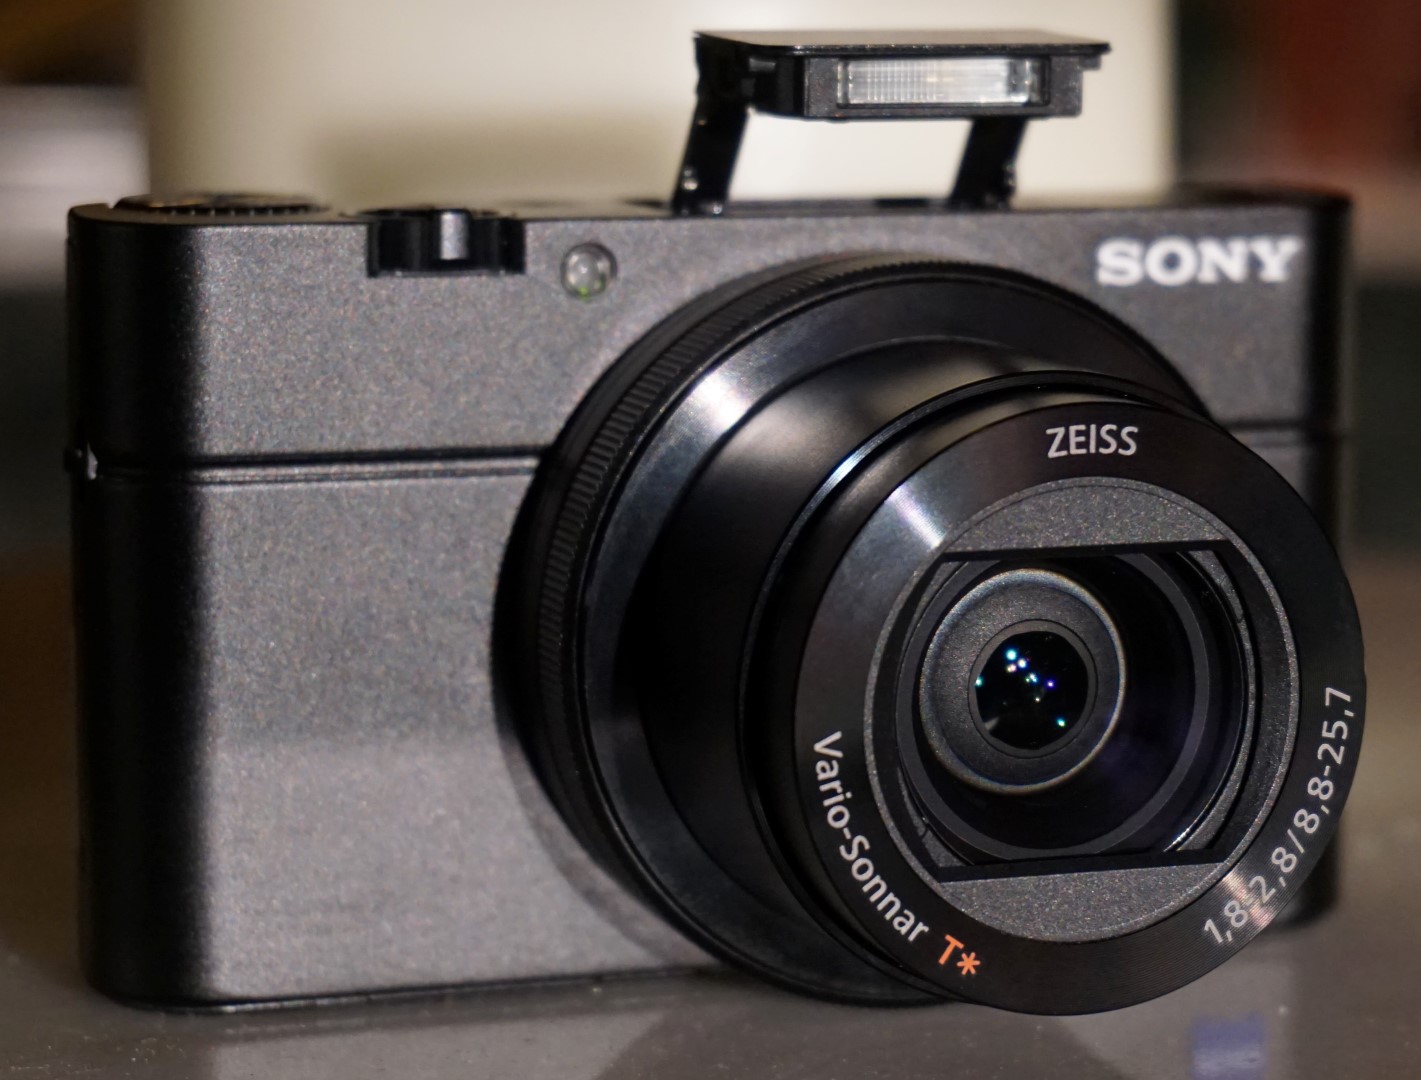 Sony Cyber-shot DSC-RX100 III | Camera News at Cameraegg